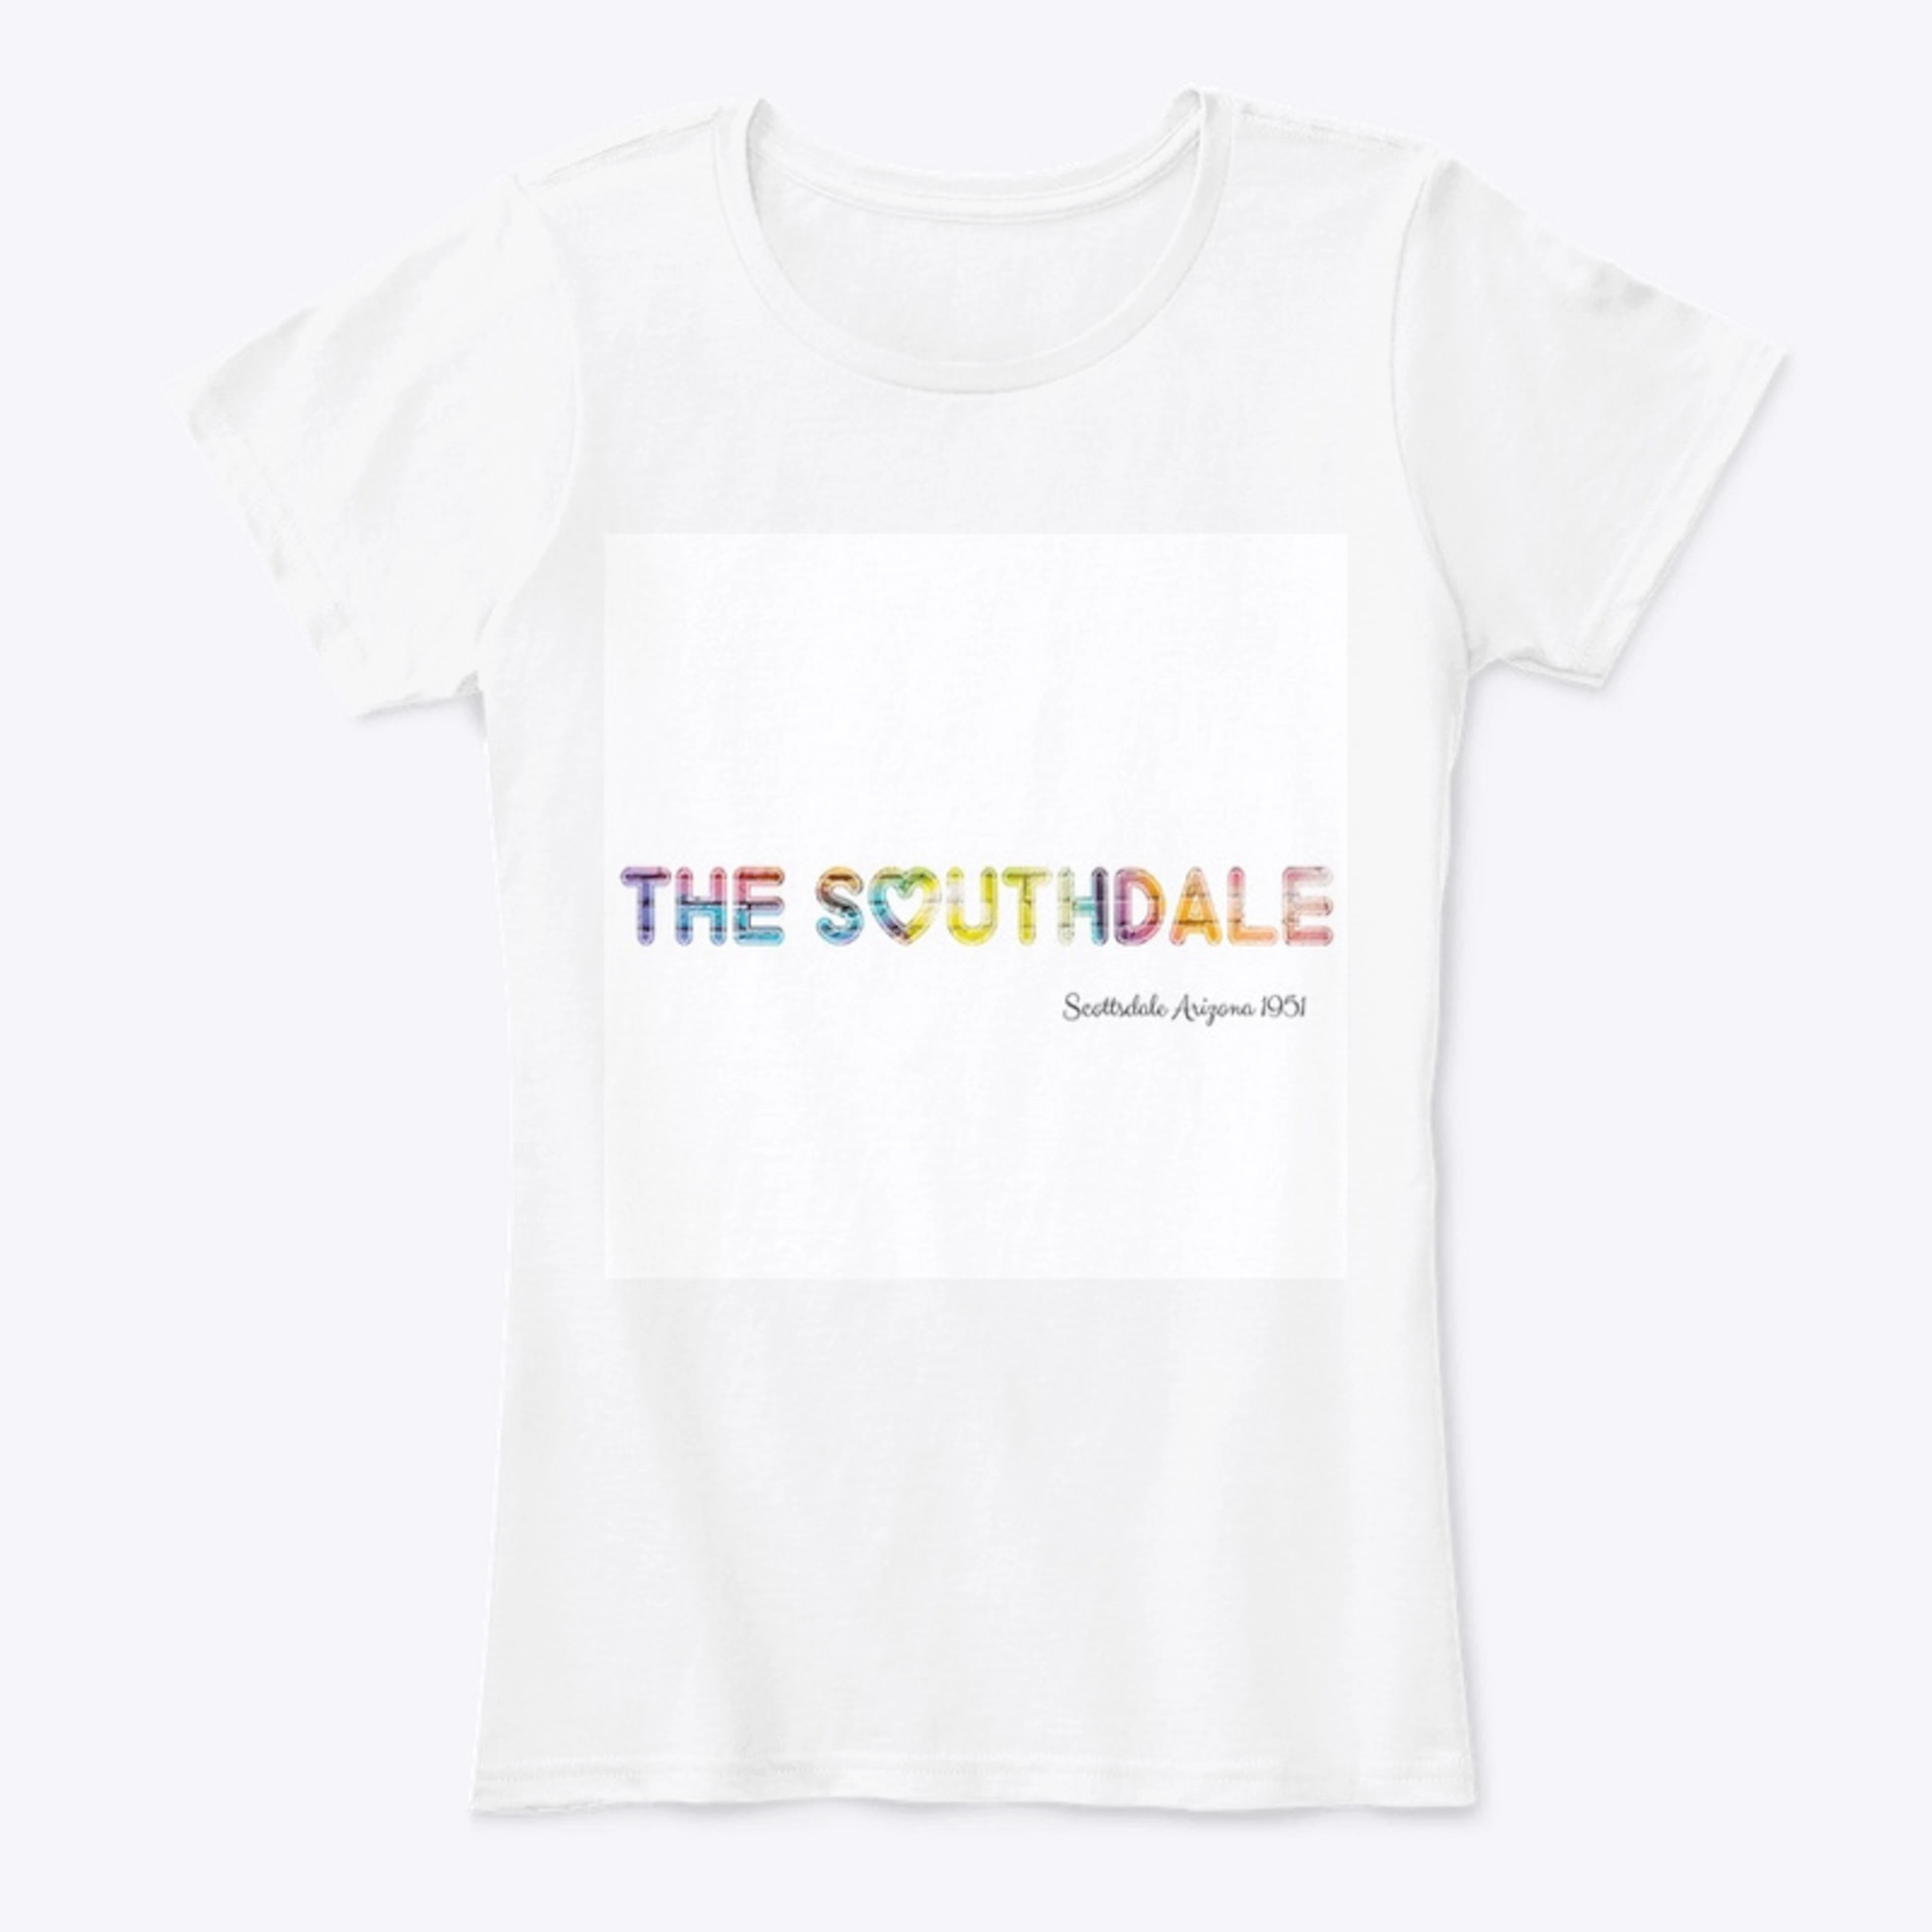 Scottsdale Arizona Southdale Party Shirt